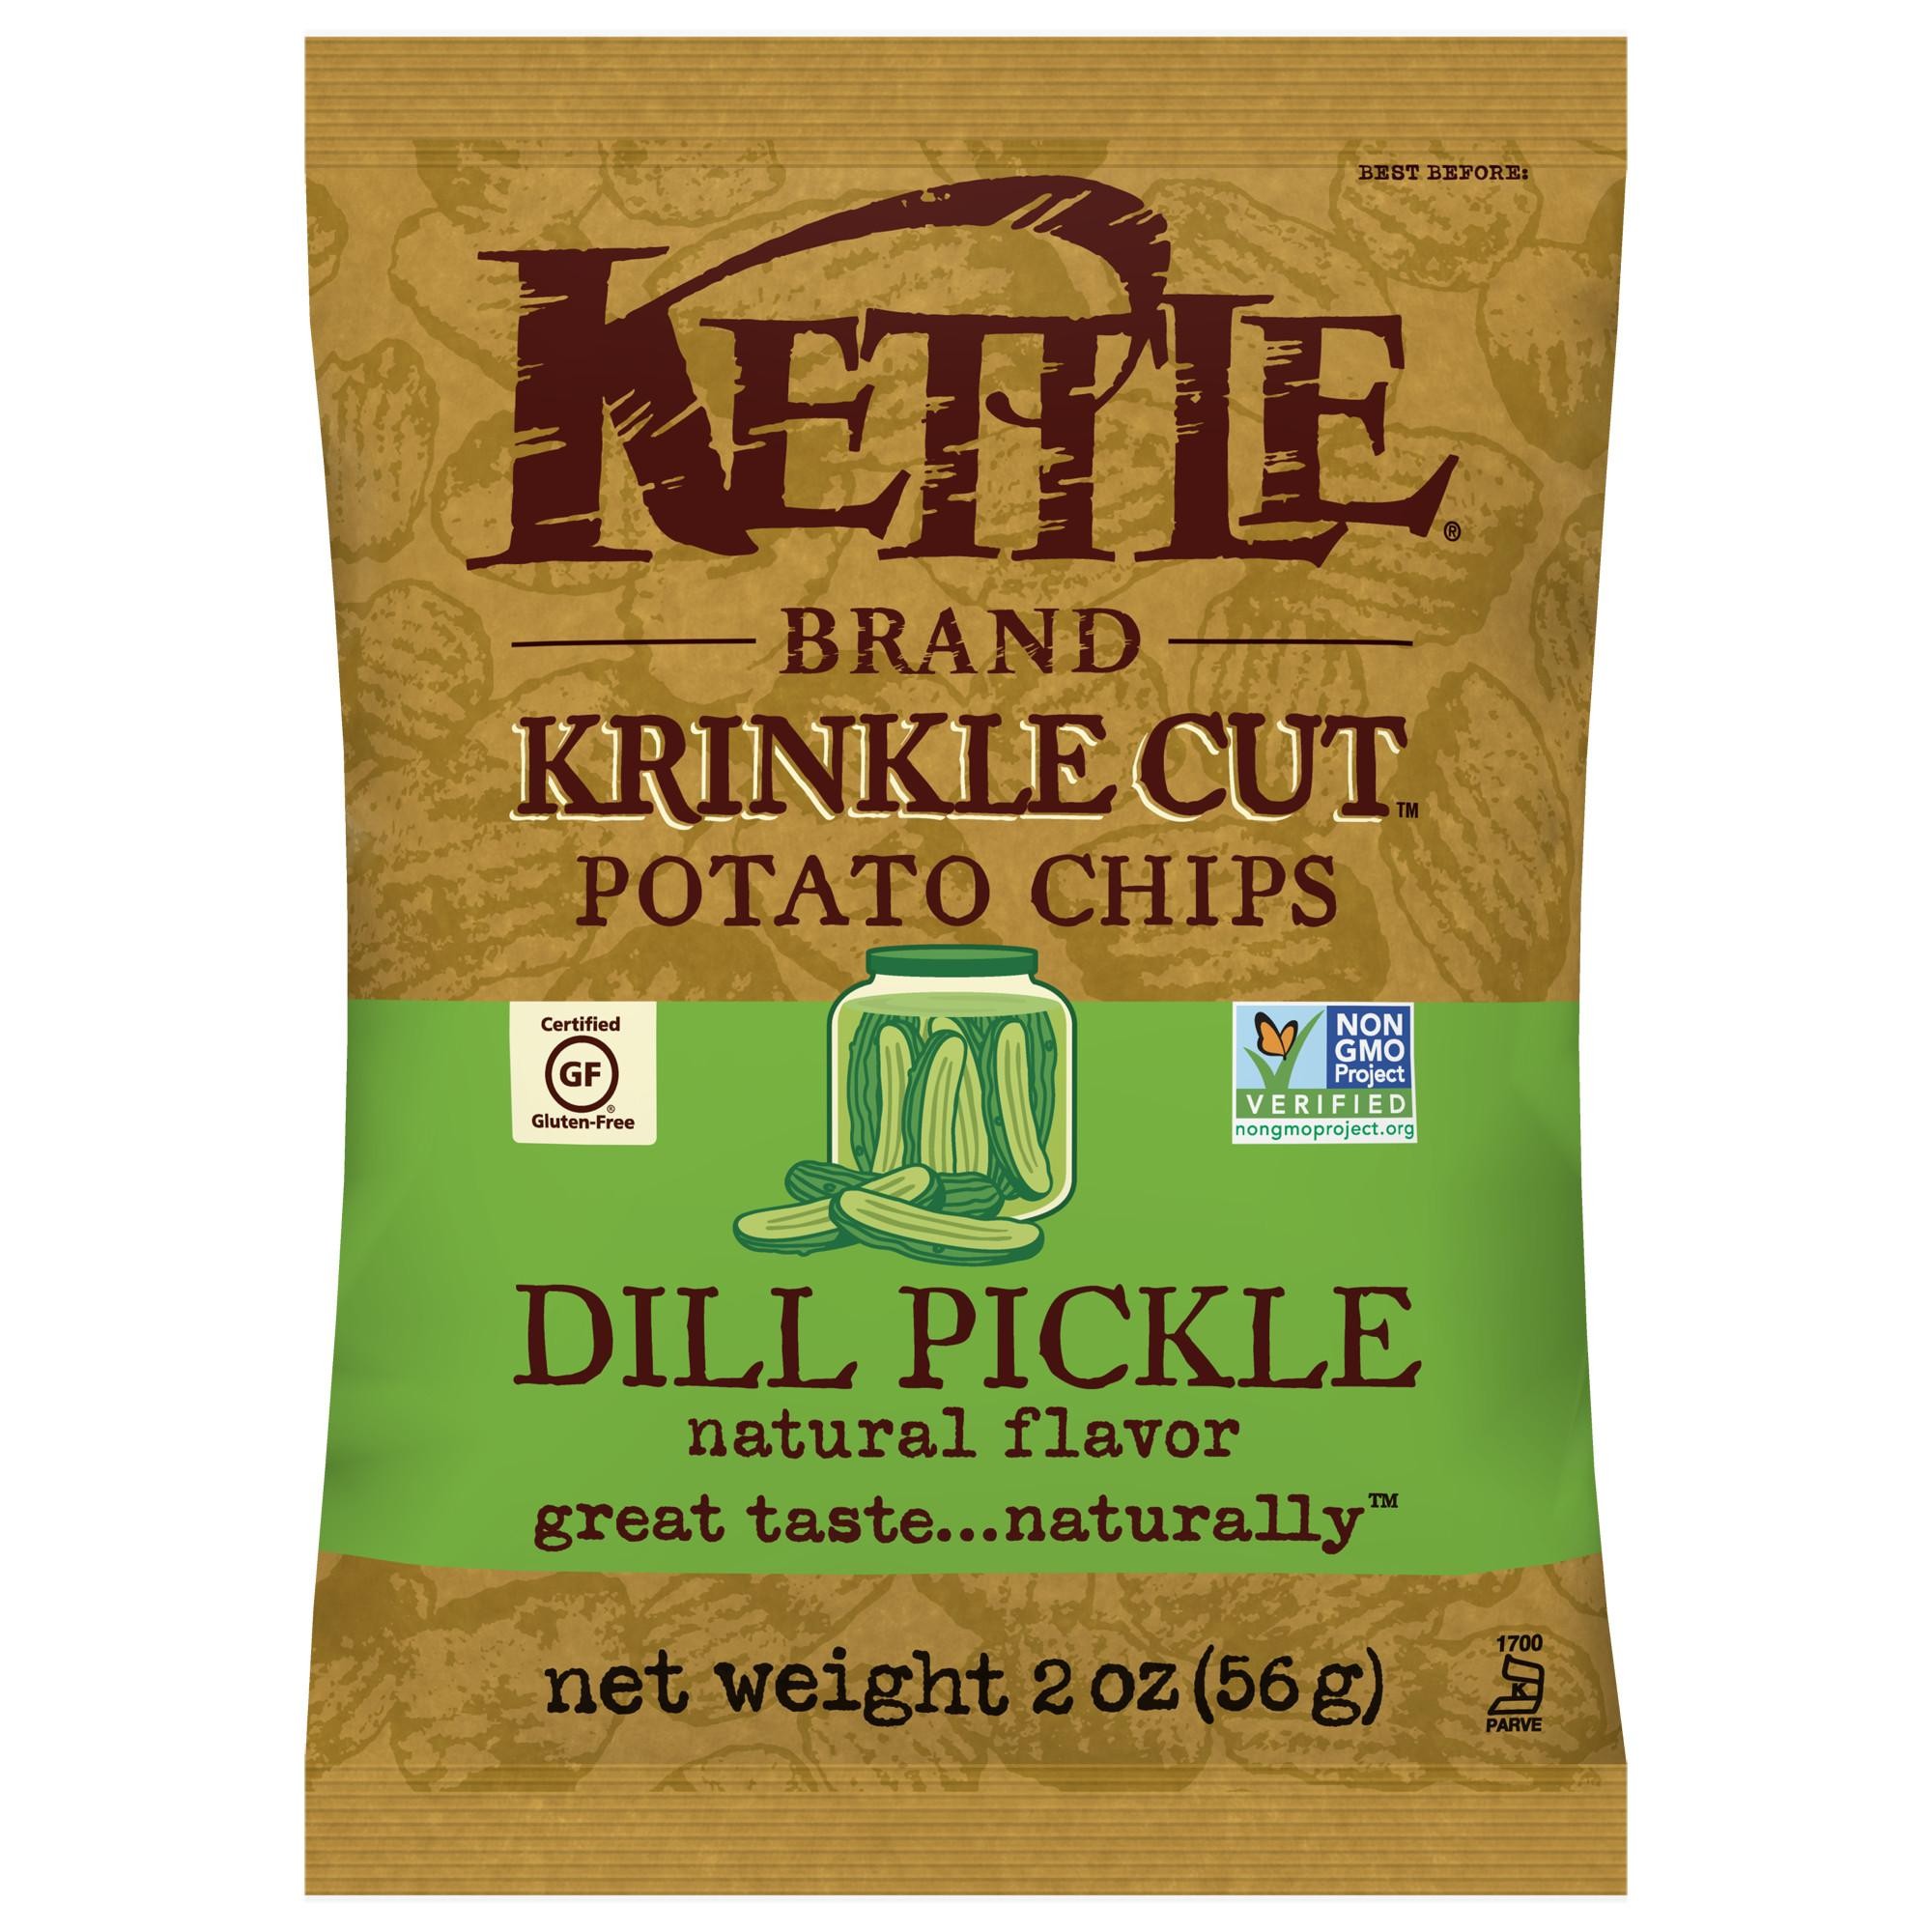 Kettle Brand Potato Chips  Krinkle Cut  Dill Pickle Kettle Chips  2oz